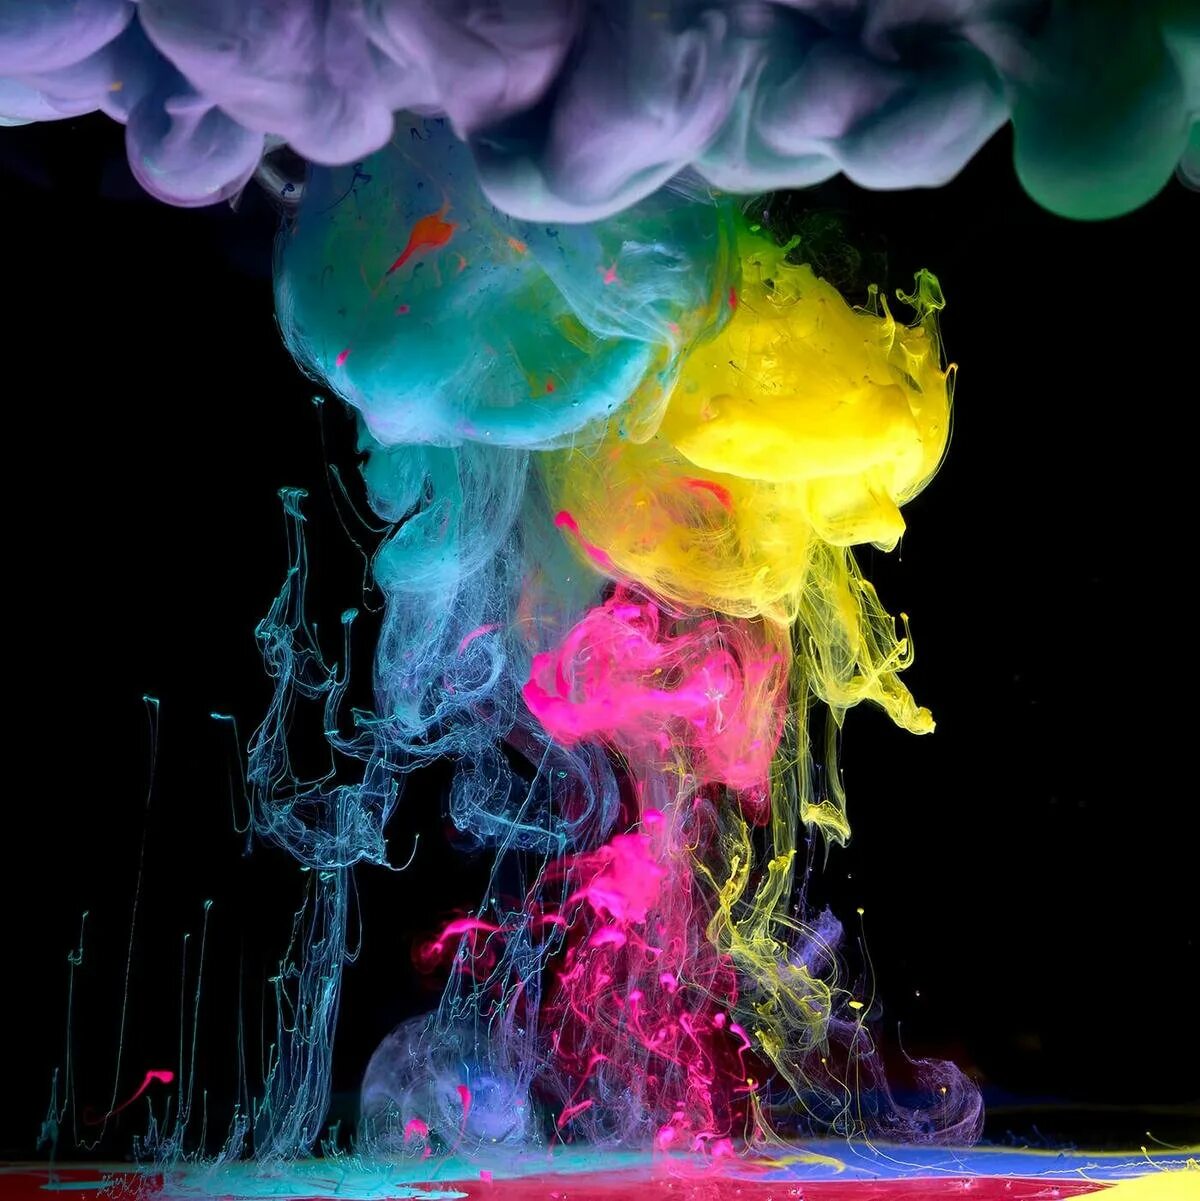 Water paint. Фотограф Марк Моусон. Взрыв красок. Абстракция взрыв красок. Краска в воде.